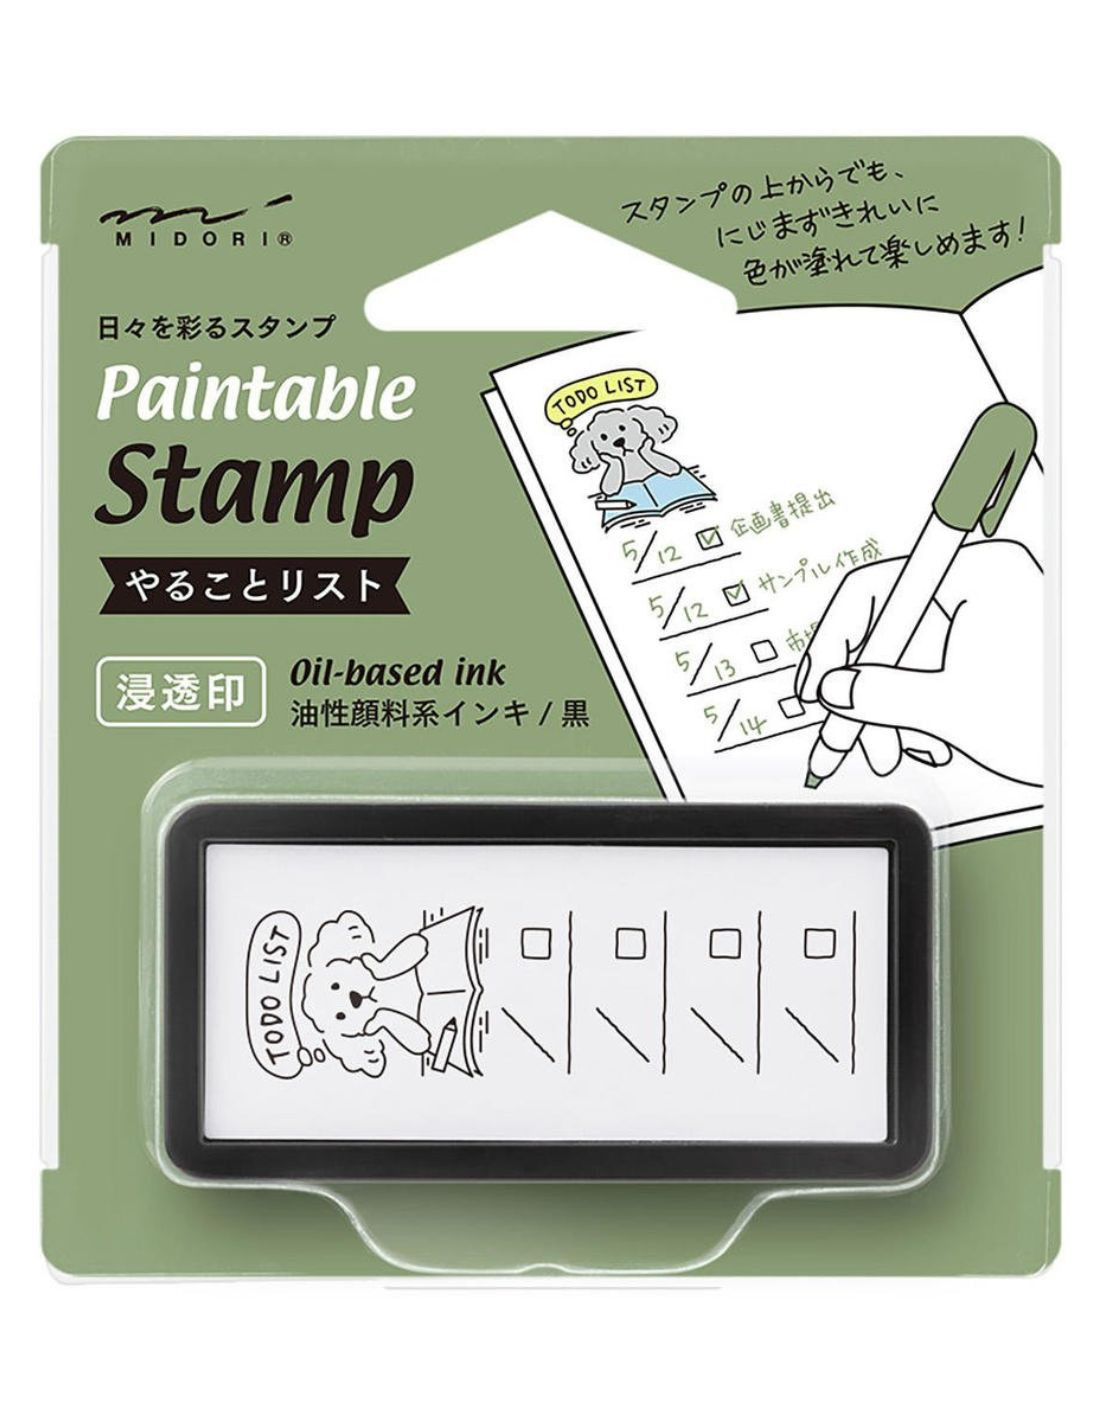 Tampon pré-encré Paintable Stamp - To-do vertical - Midori